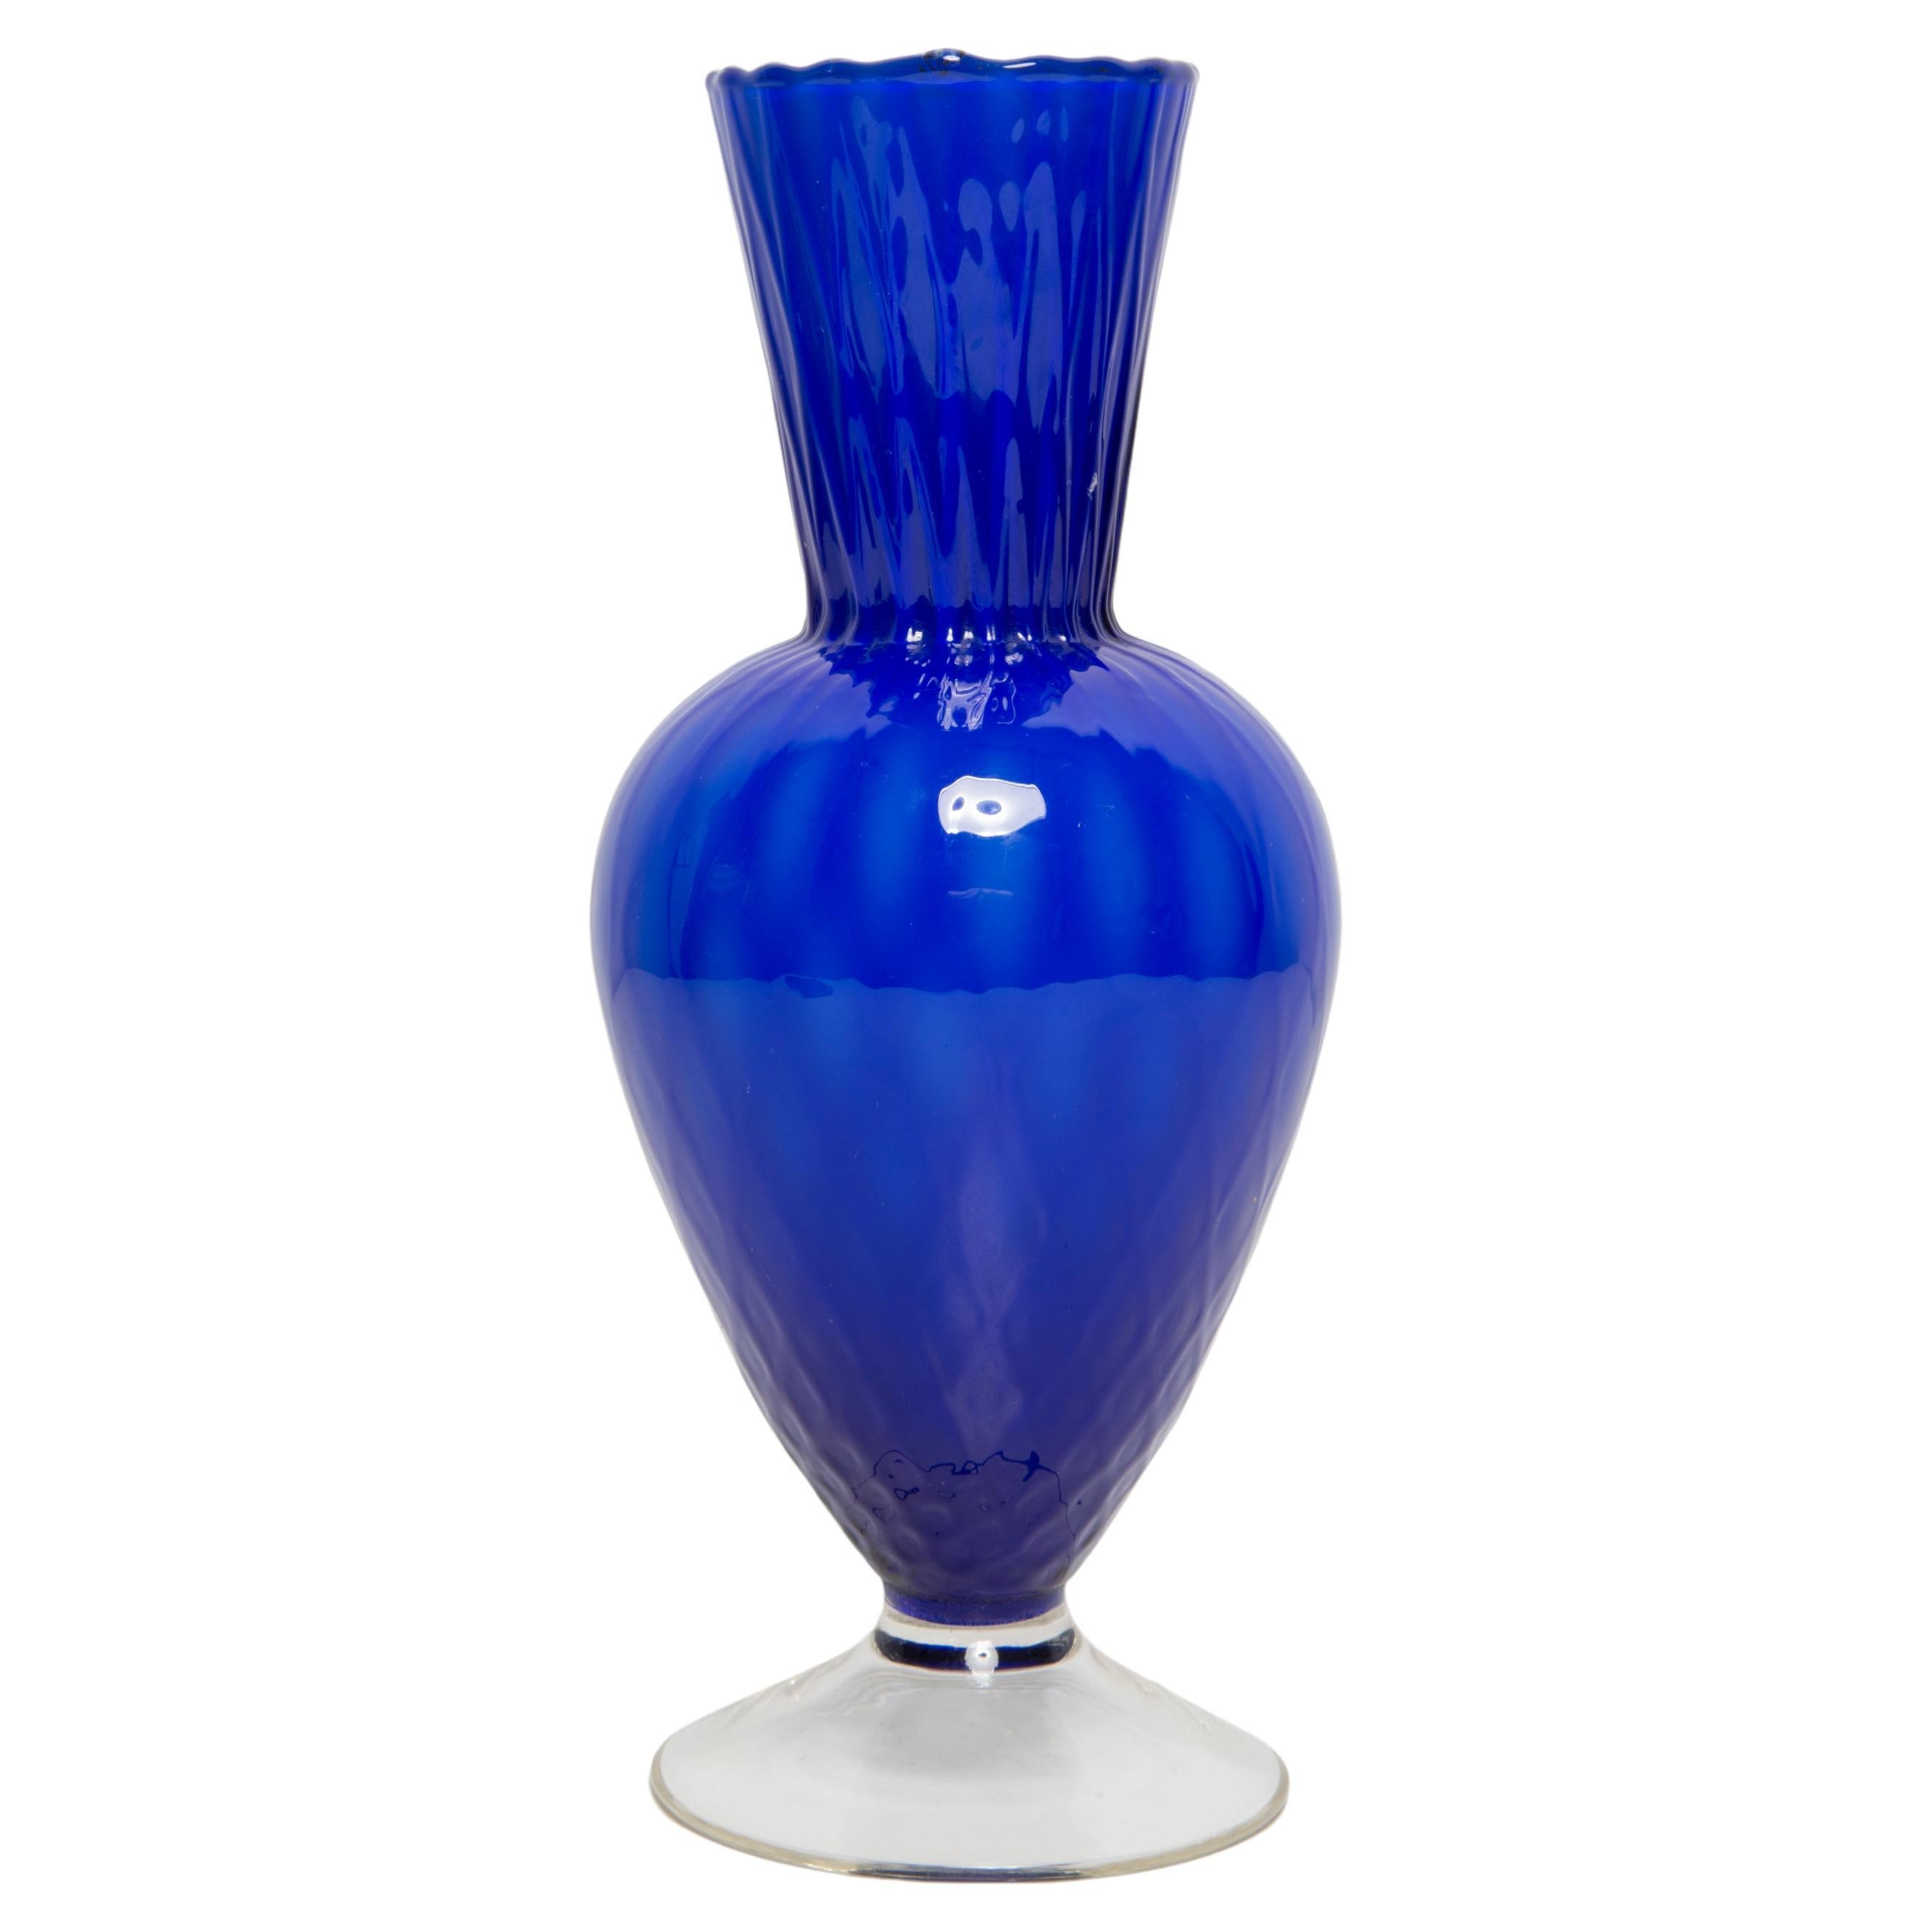 Mid Century Vintage Blue Decorative Glass Vase, Europe, 1960s